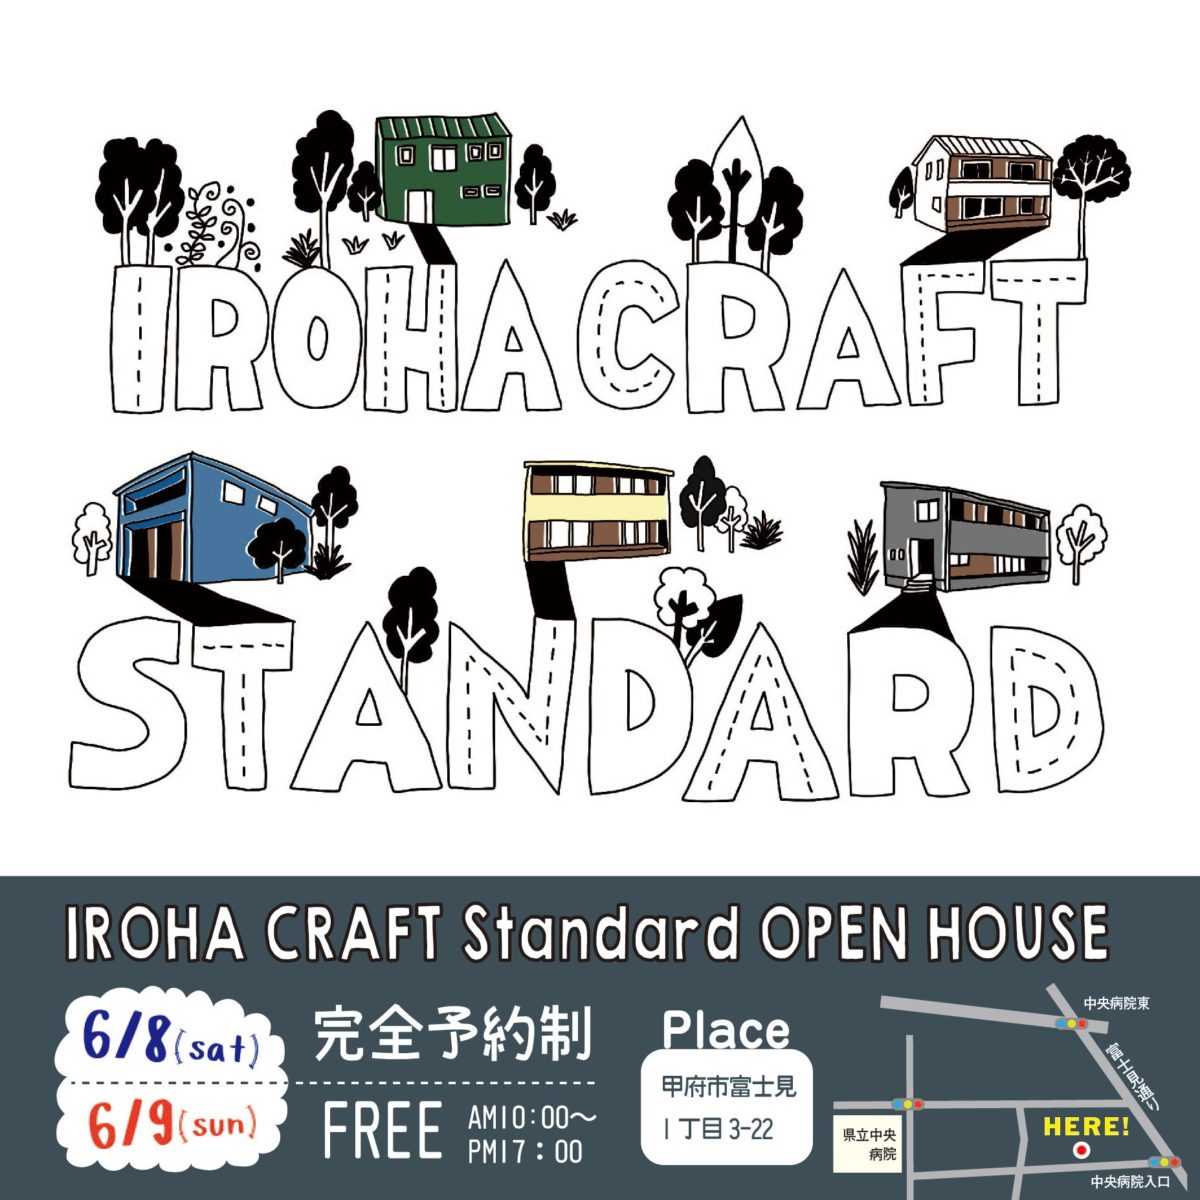 IROHA CRAFT Standard OPEN HOUSEのお知らせ